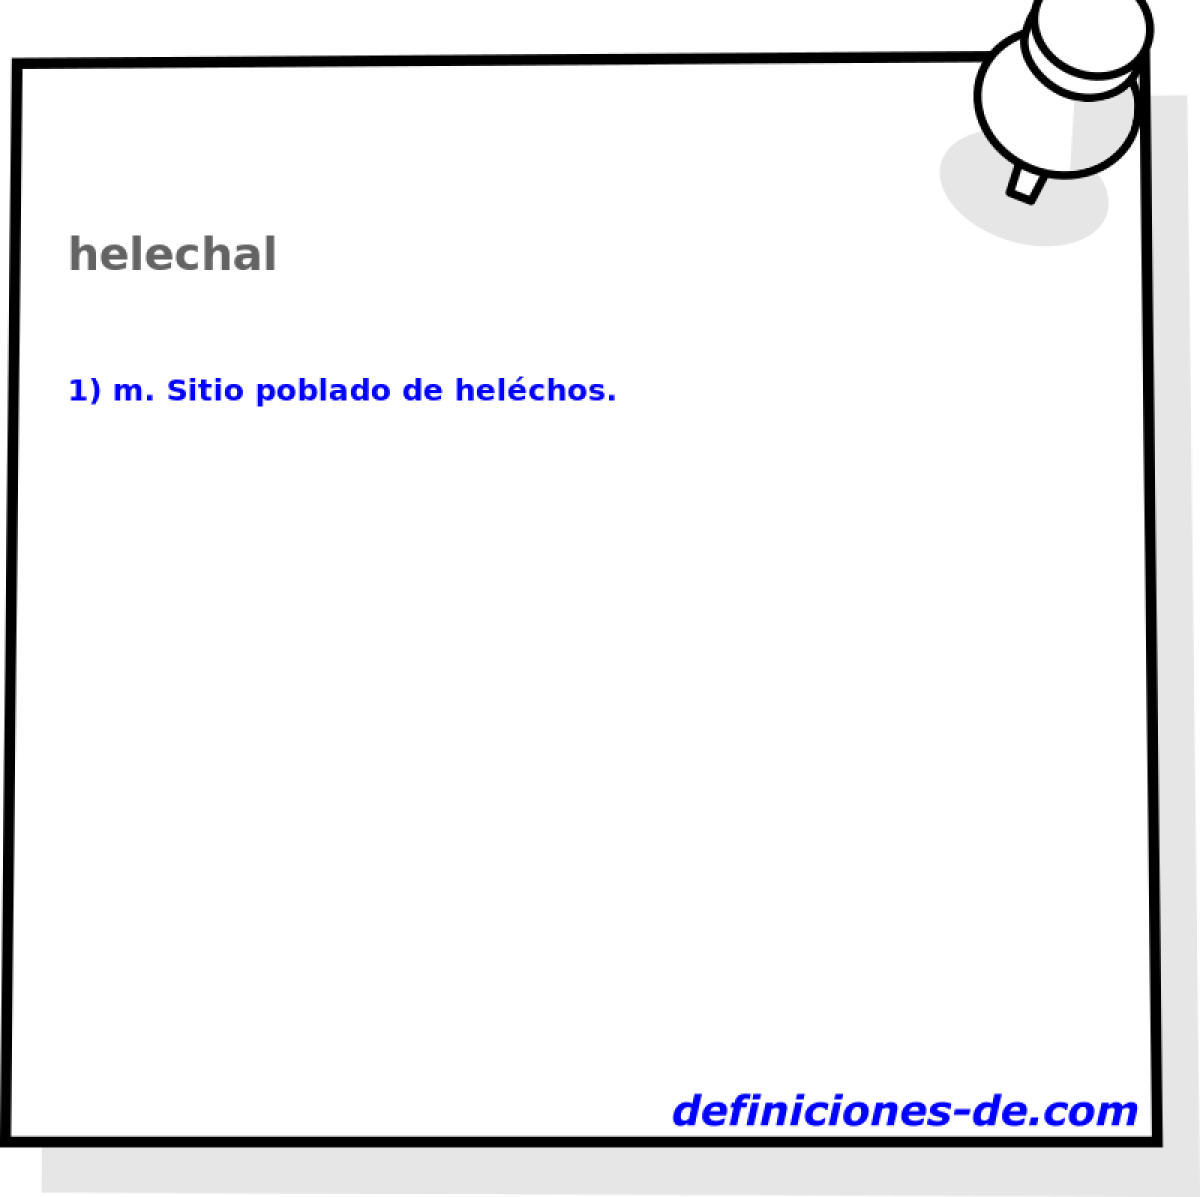 helechal 